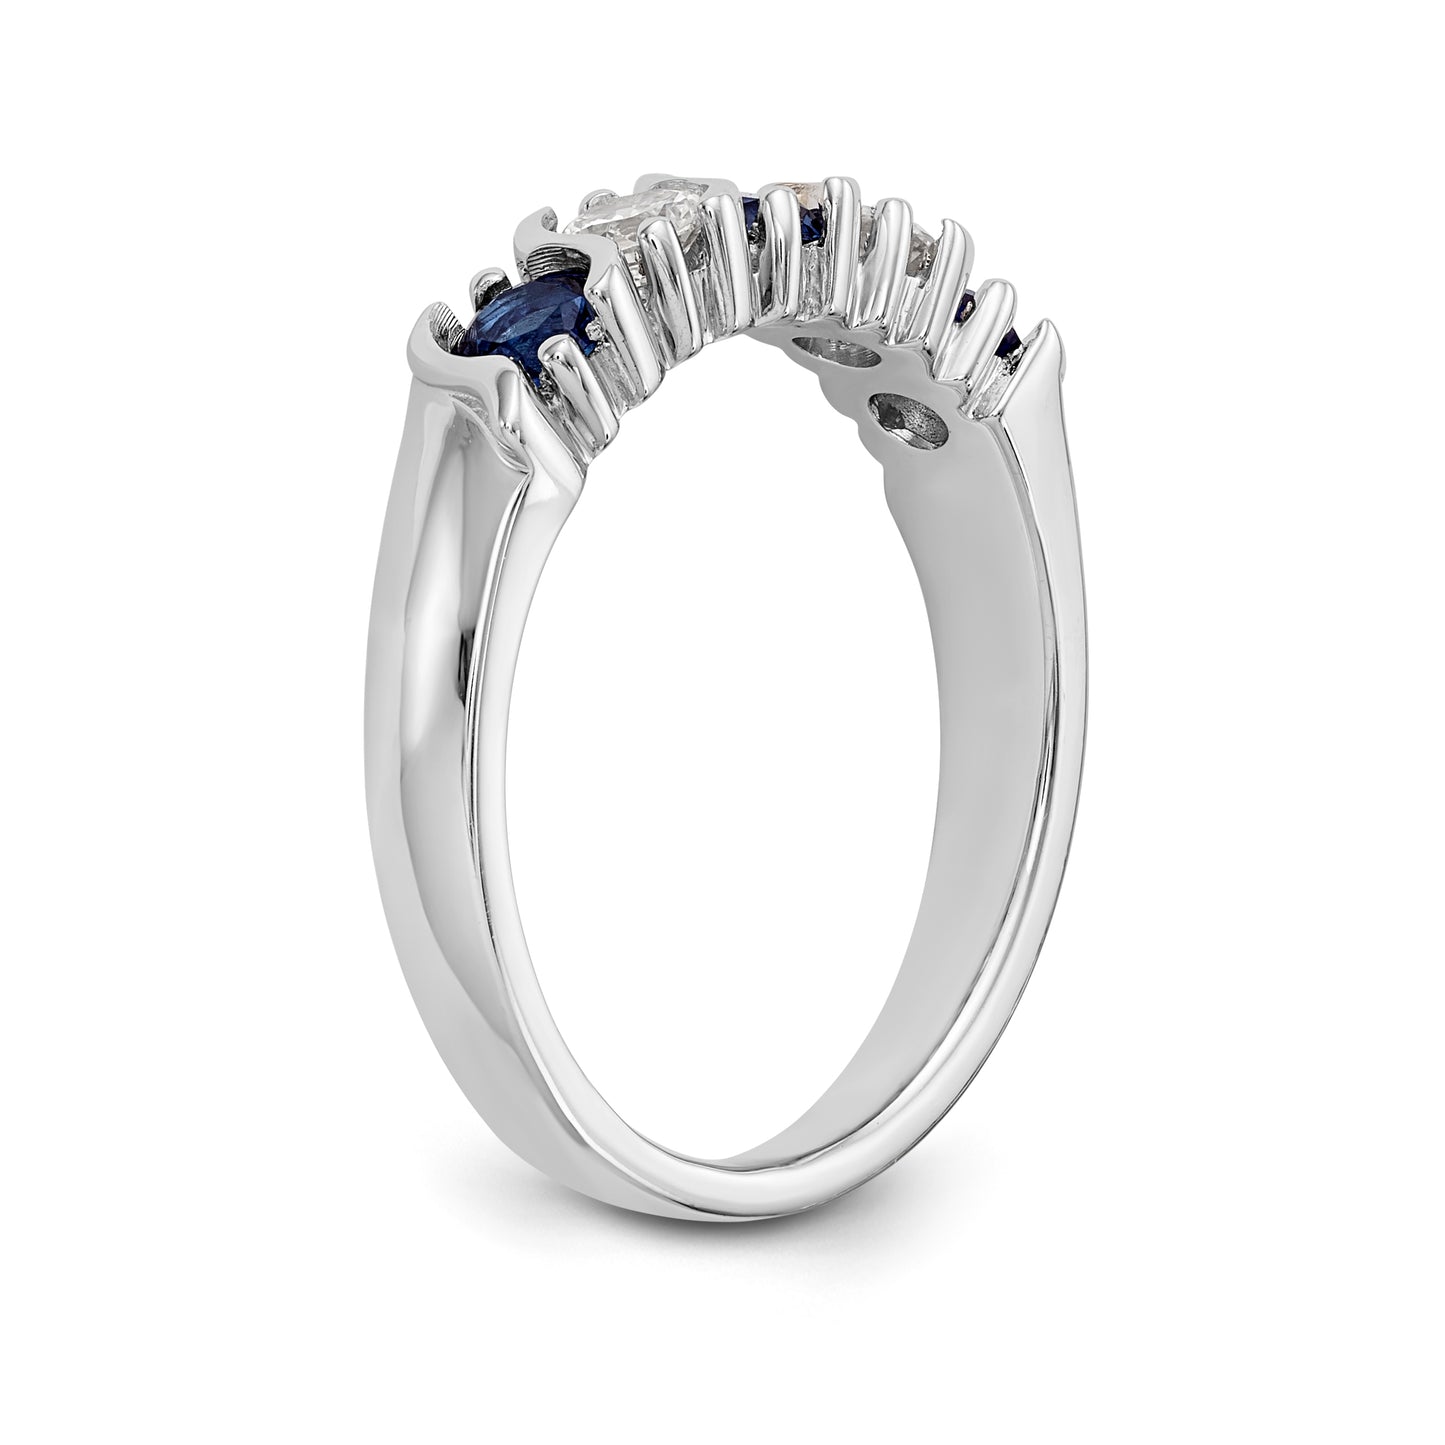 14k White Gold 3.25mm Sapphire AA Diamond 5 Stone Ring